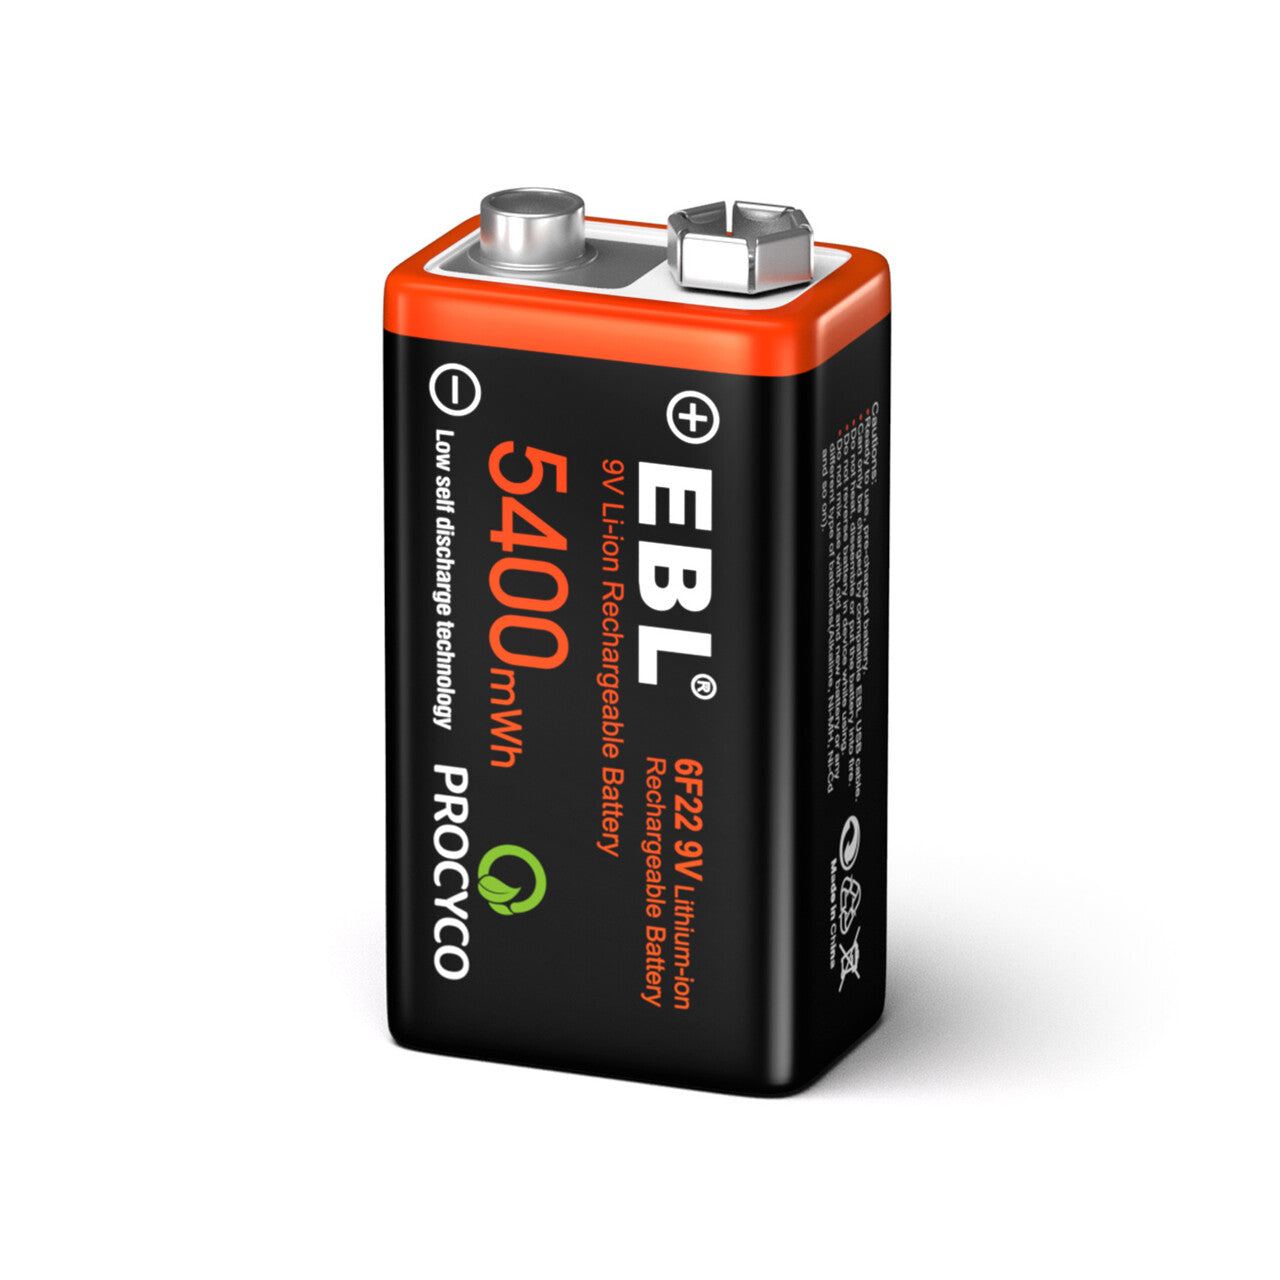 Buy Wholesale China 200w Battery Operated Speedy Multifunctional